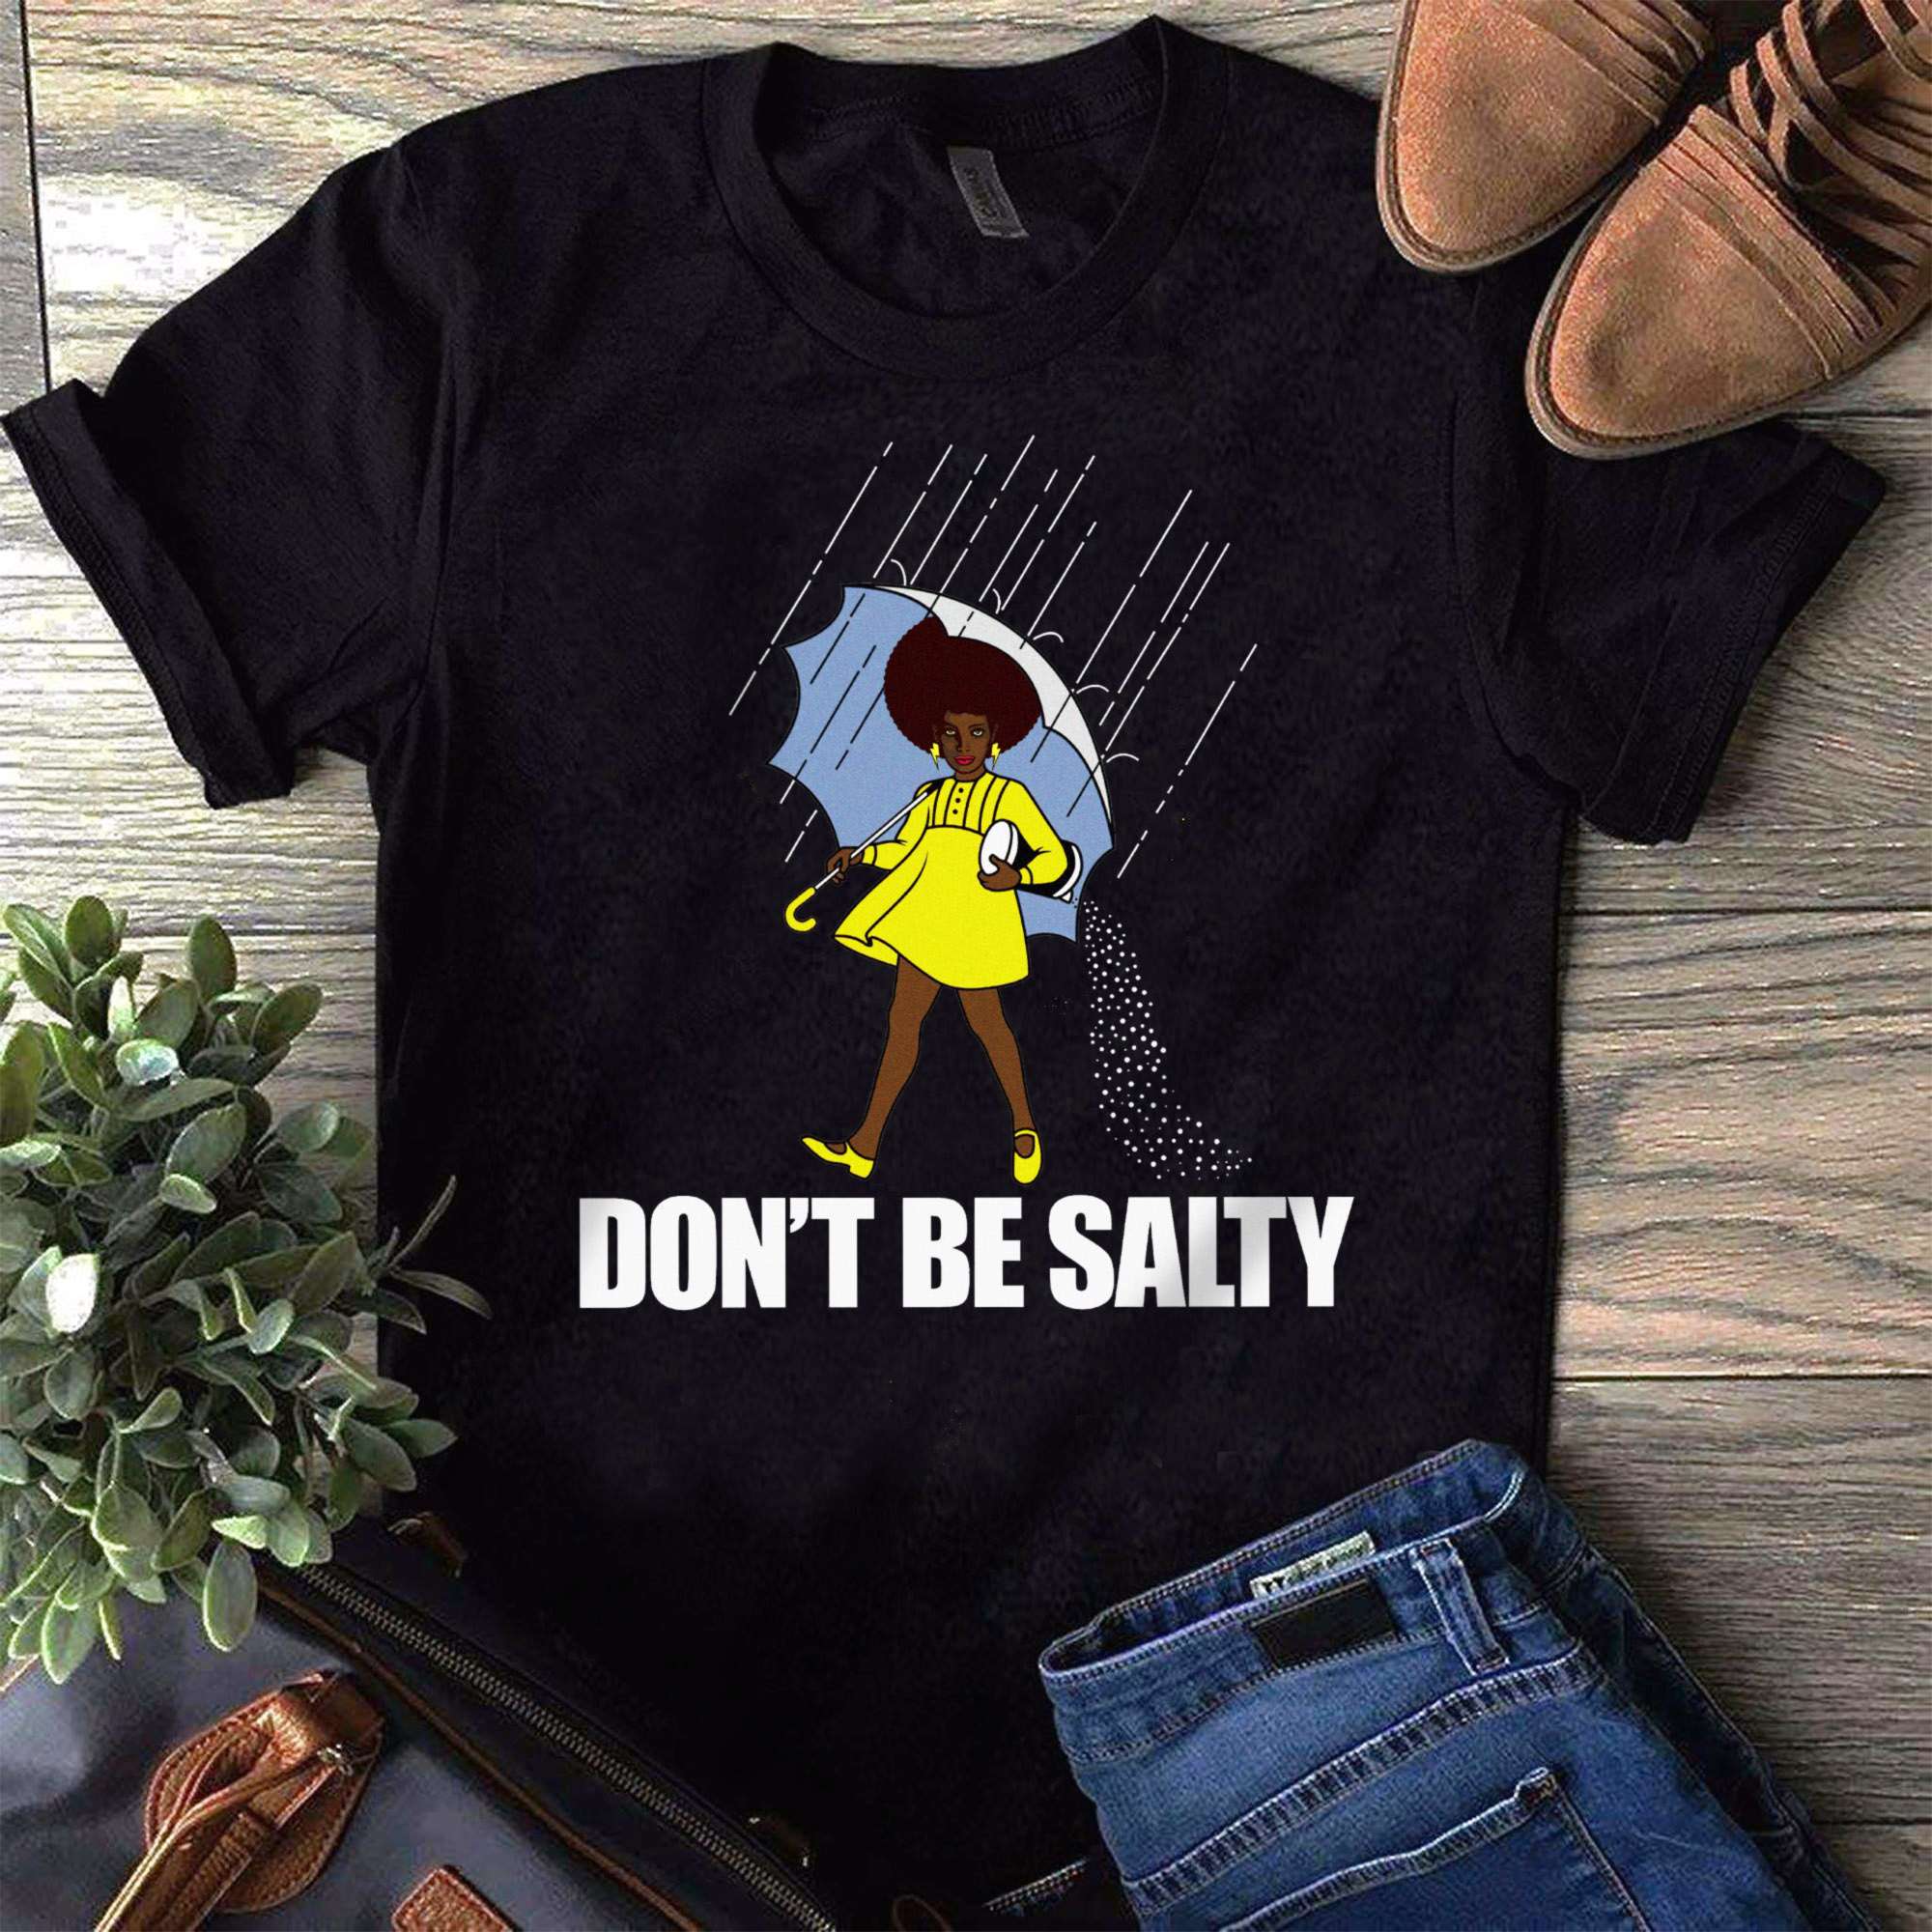 Don't be salty - Black woman with umbrella, black community Shirt ...